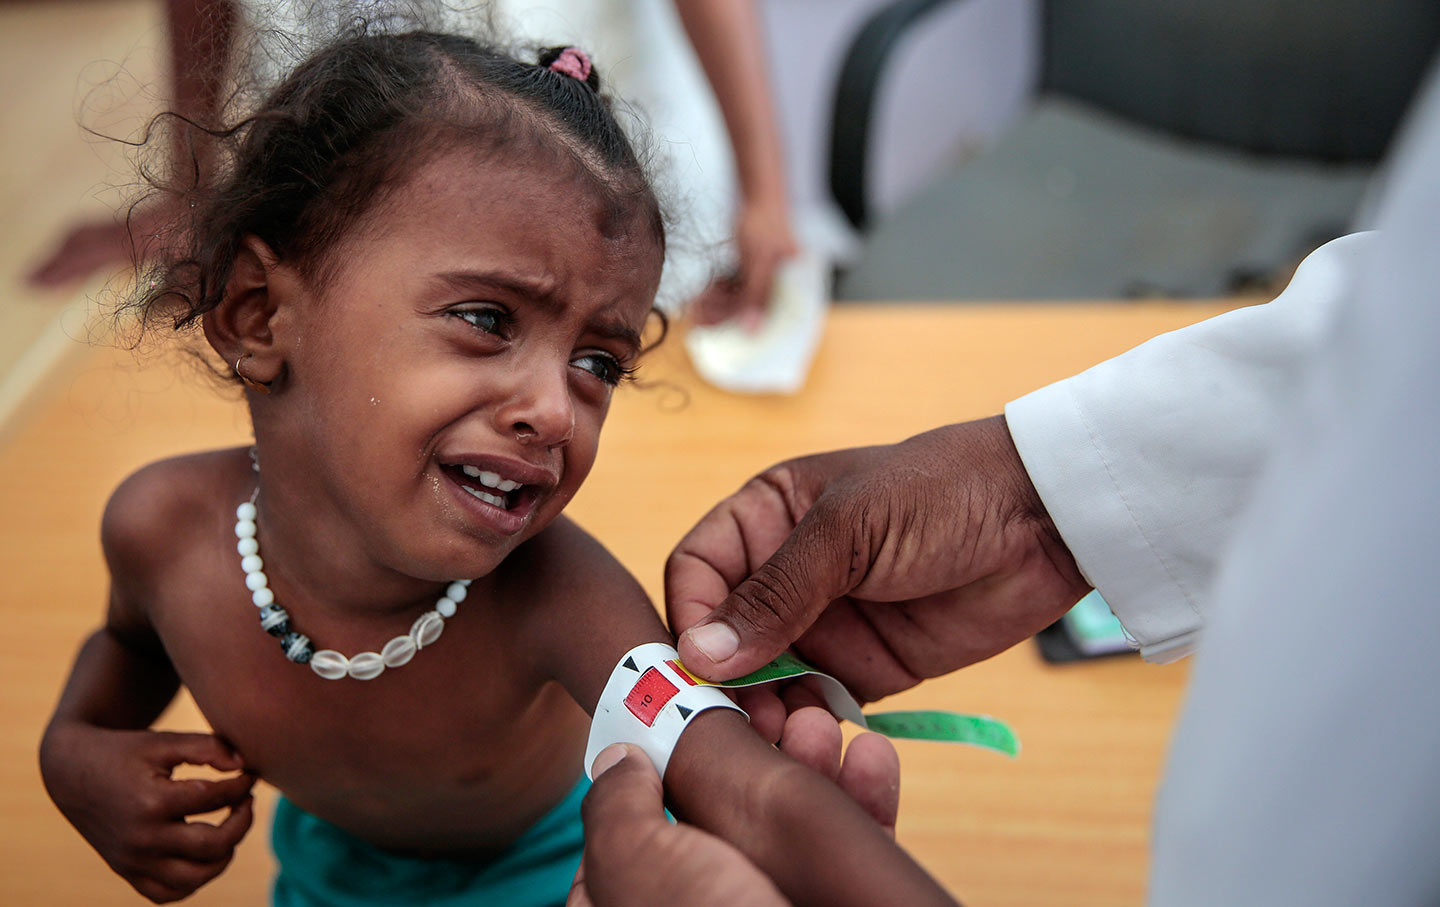 Yemen child arm measurement